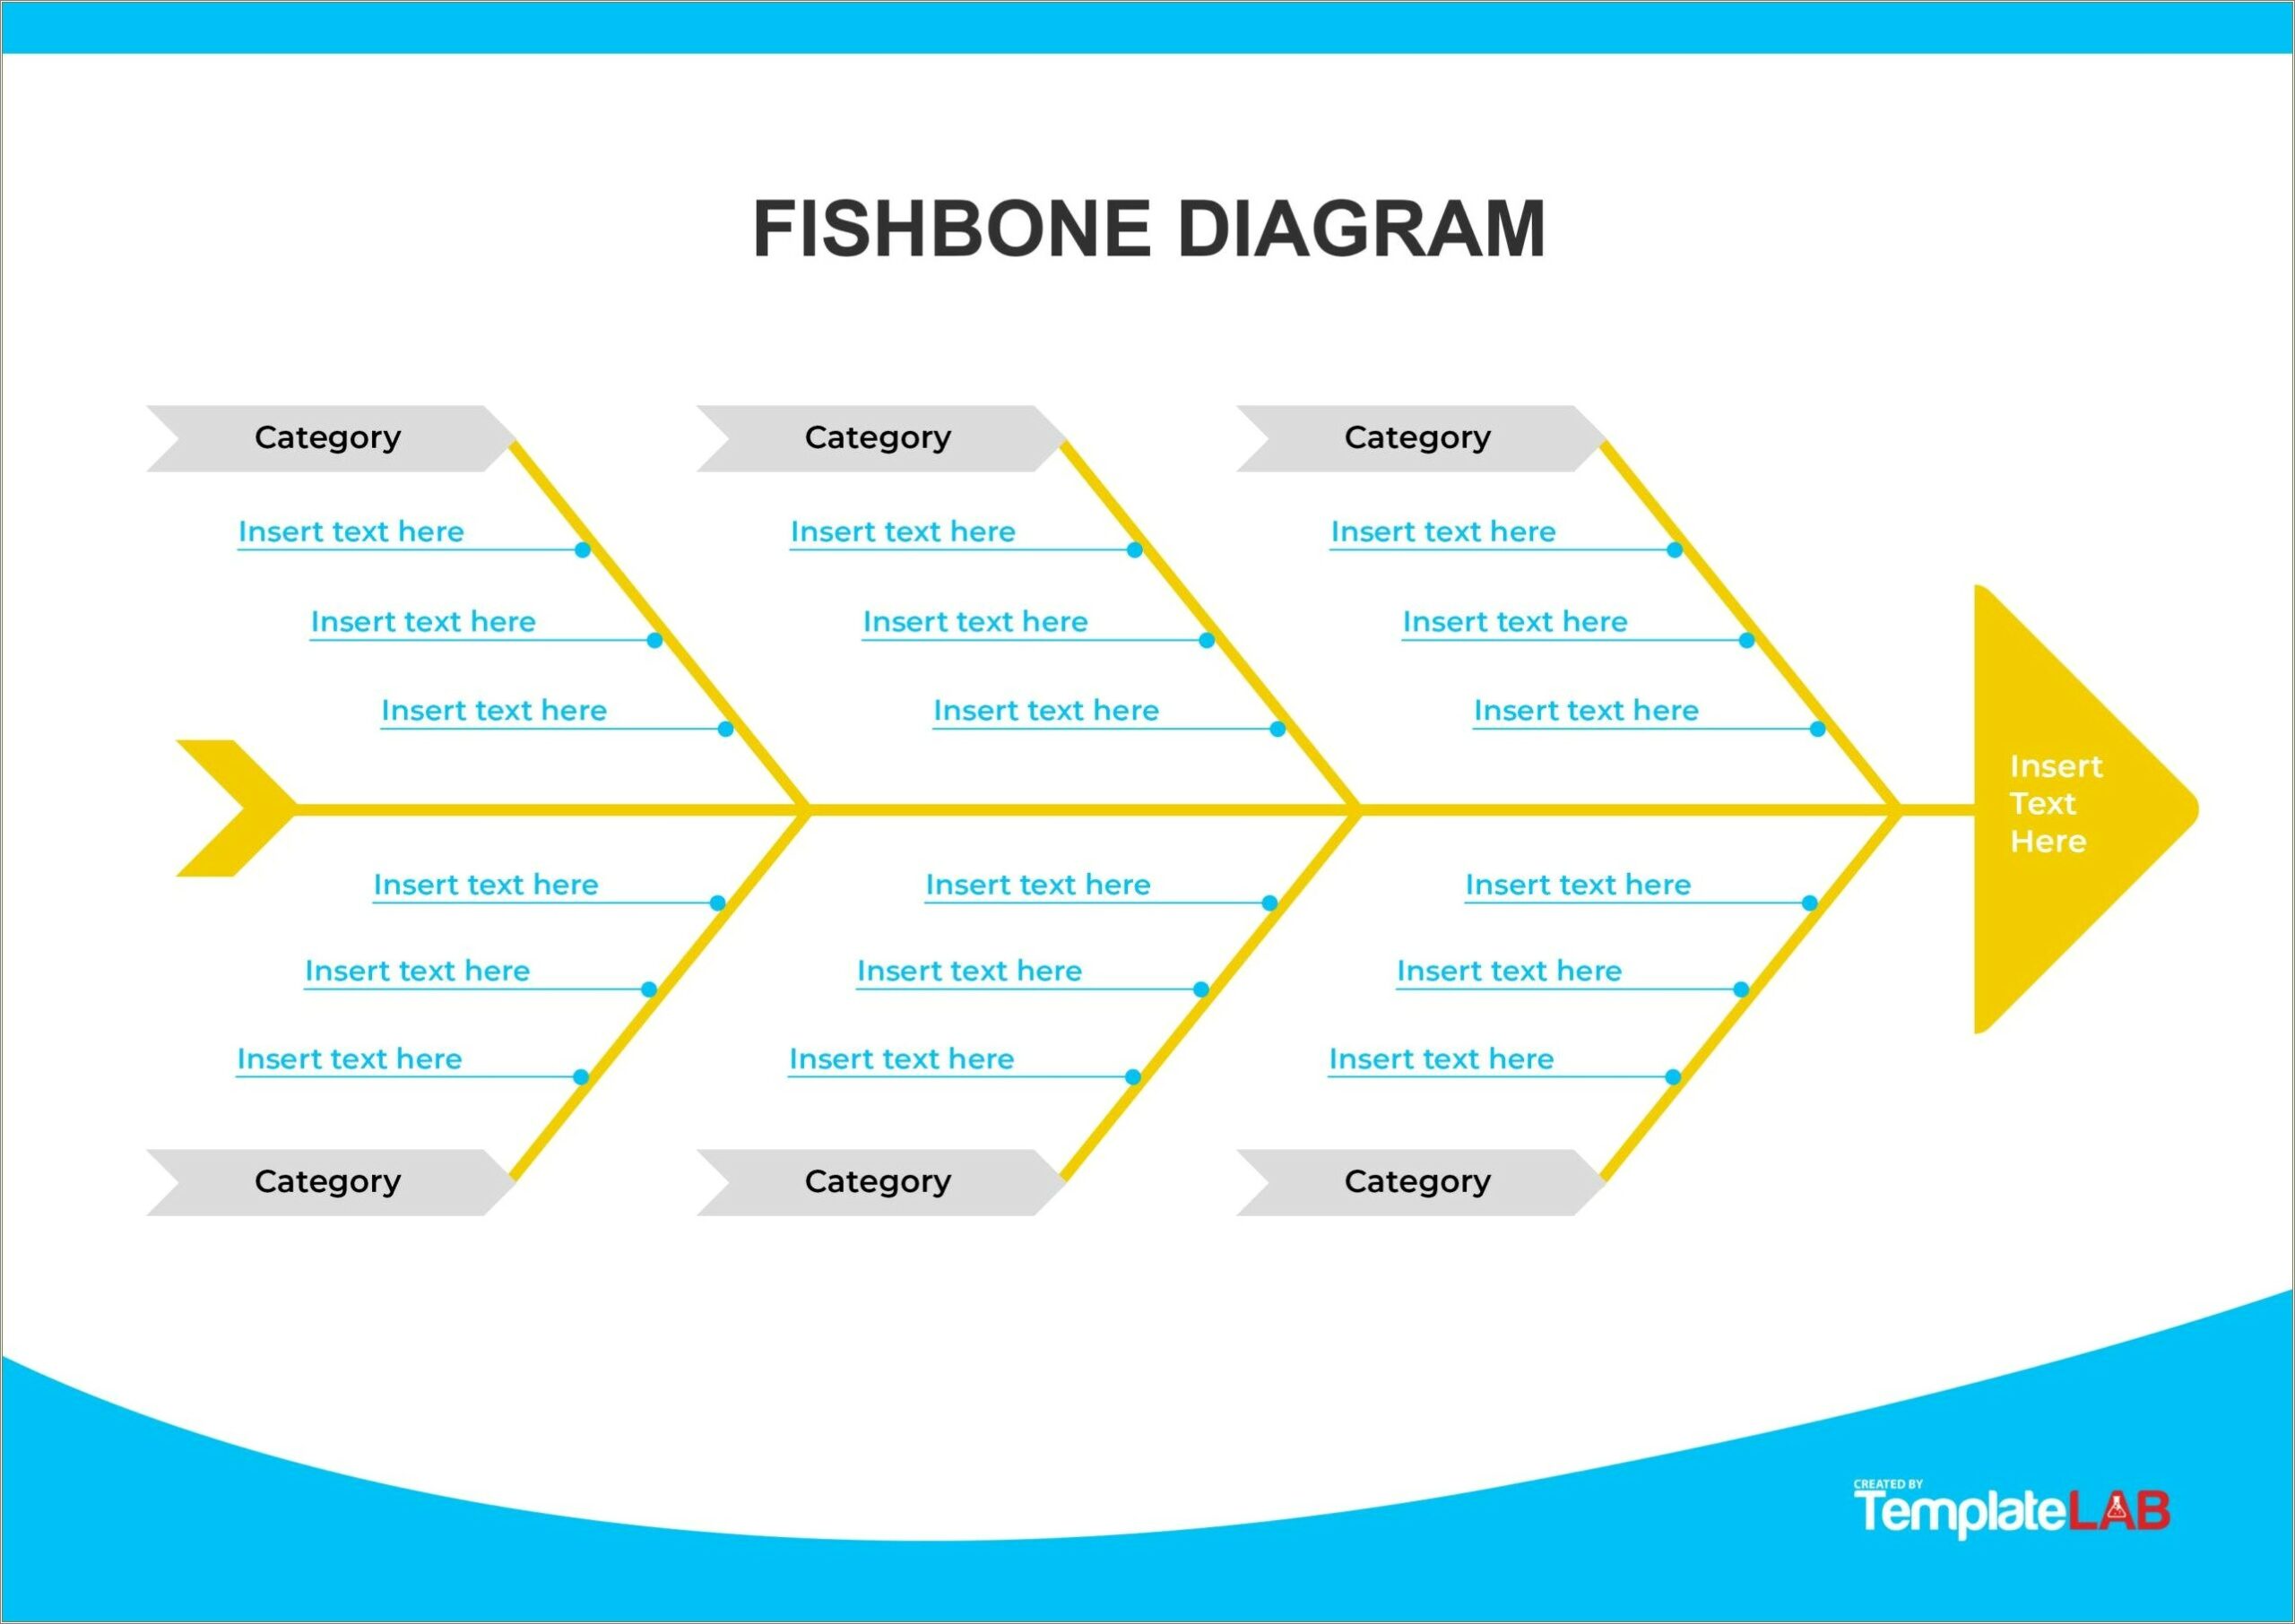 Free Fishbone Diagram Template For Word